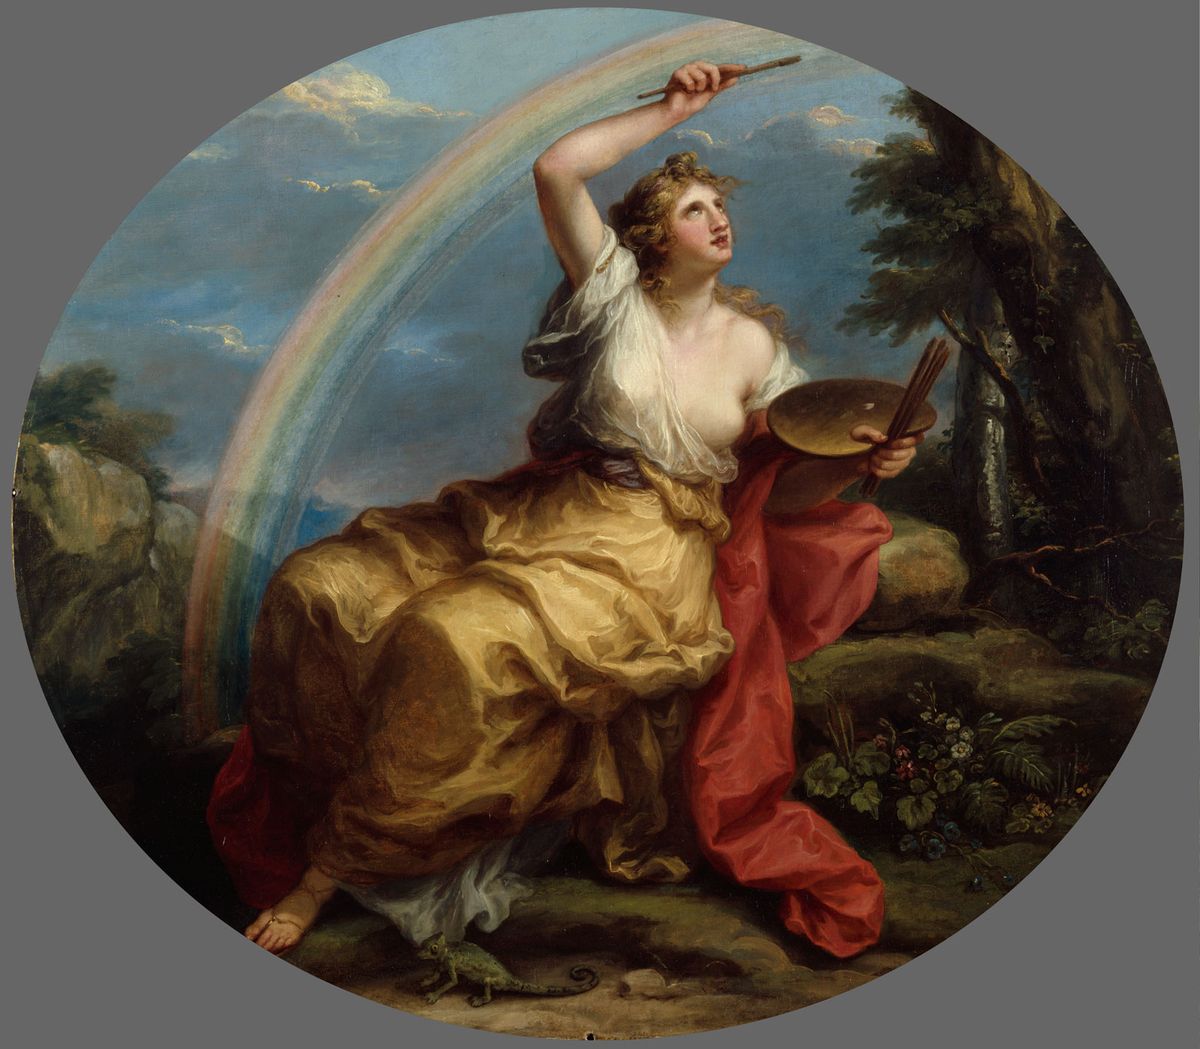 Over the rainbow: Colour (1778-80) is one of Kauffman’s four Royal Academy of Arts ceiling allegories © Royal Academy of Arts. Photo: John Hammond